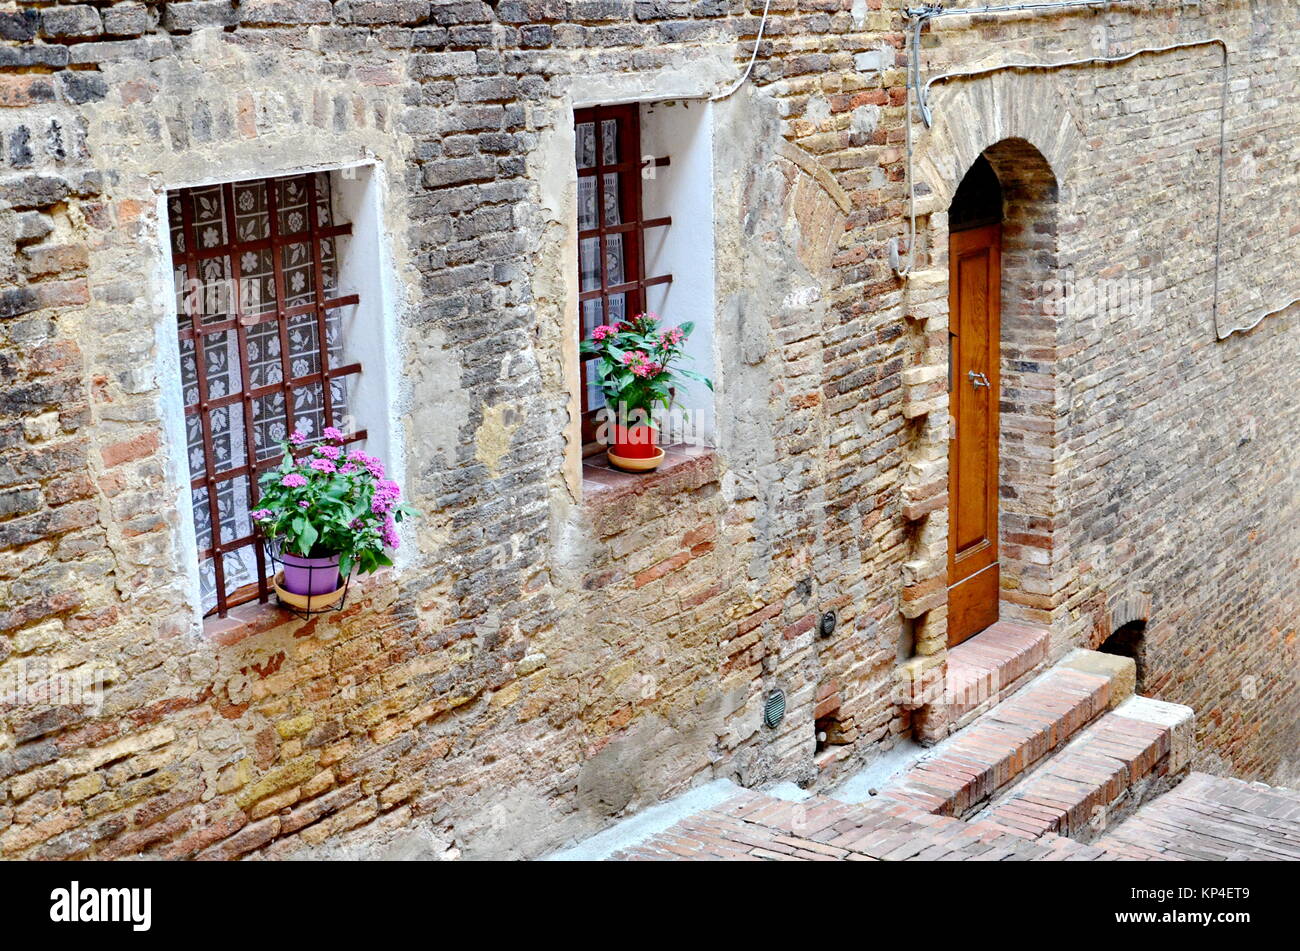 Stone and brick walls in the hill town of San Gimignano, Tuscany, Italy Stock Photo